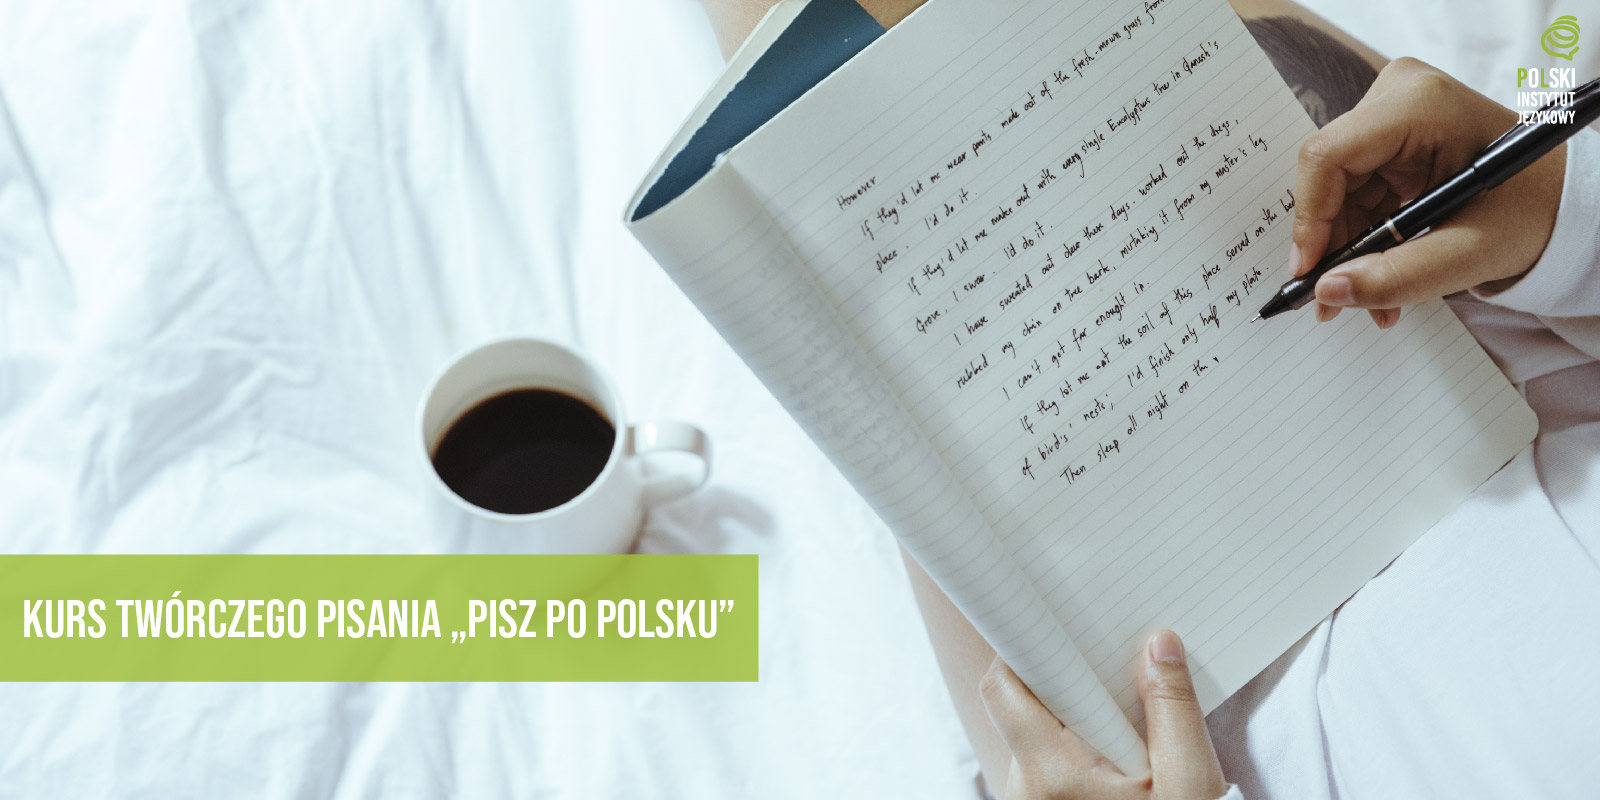 Pisz Po PolskuPL 01